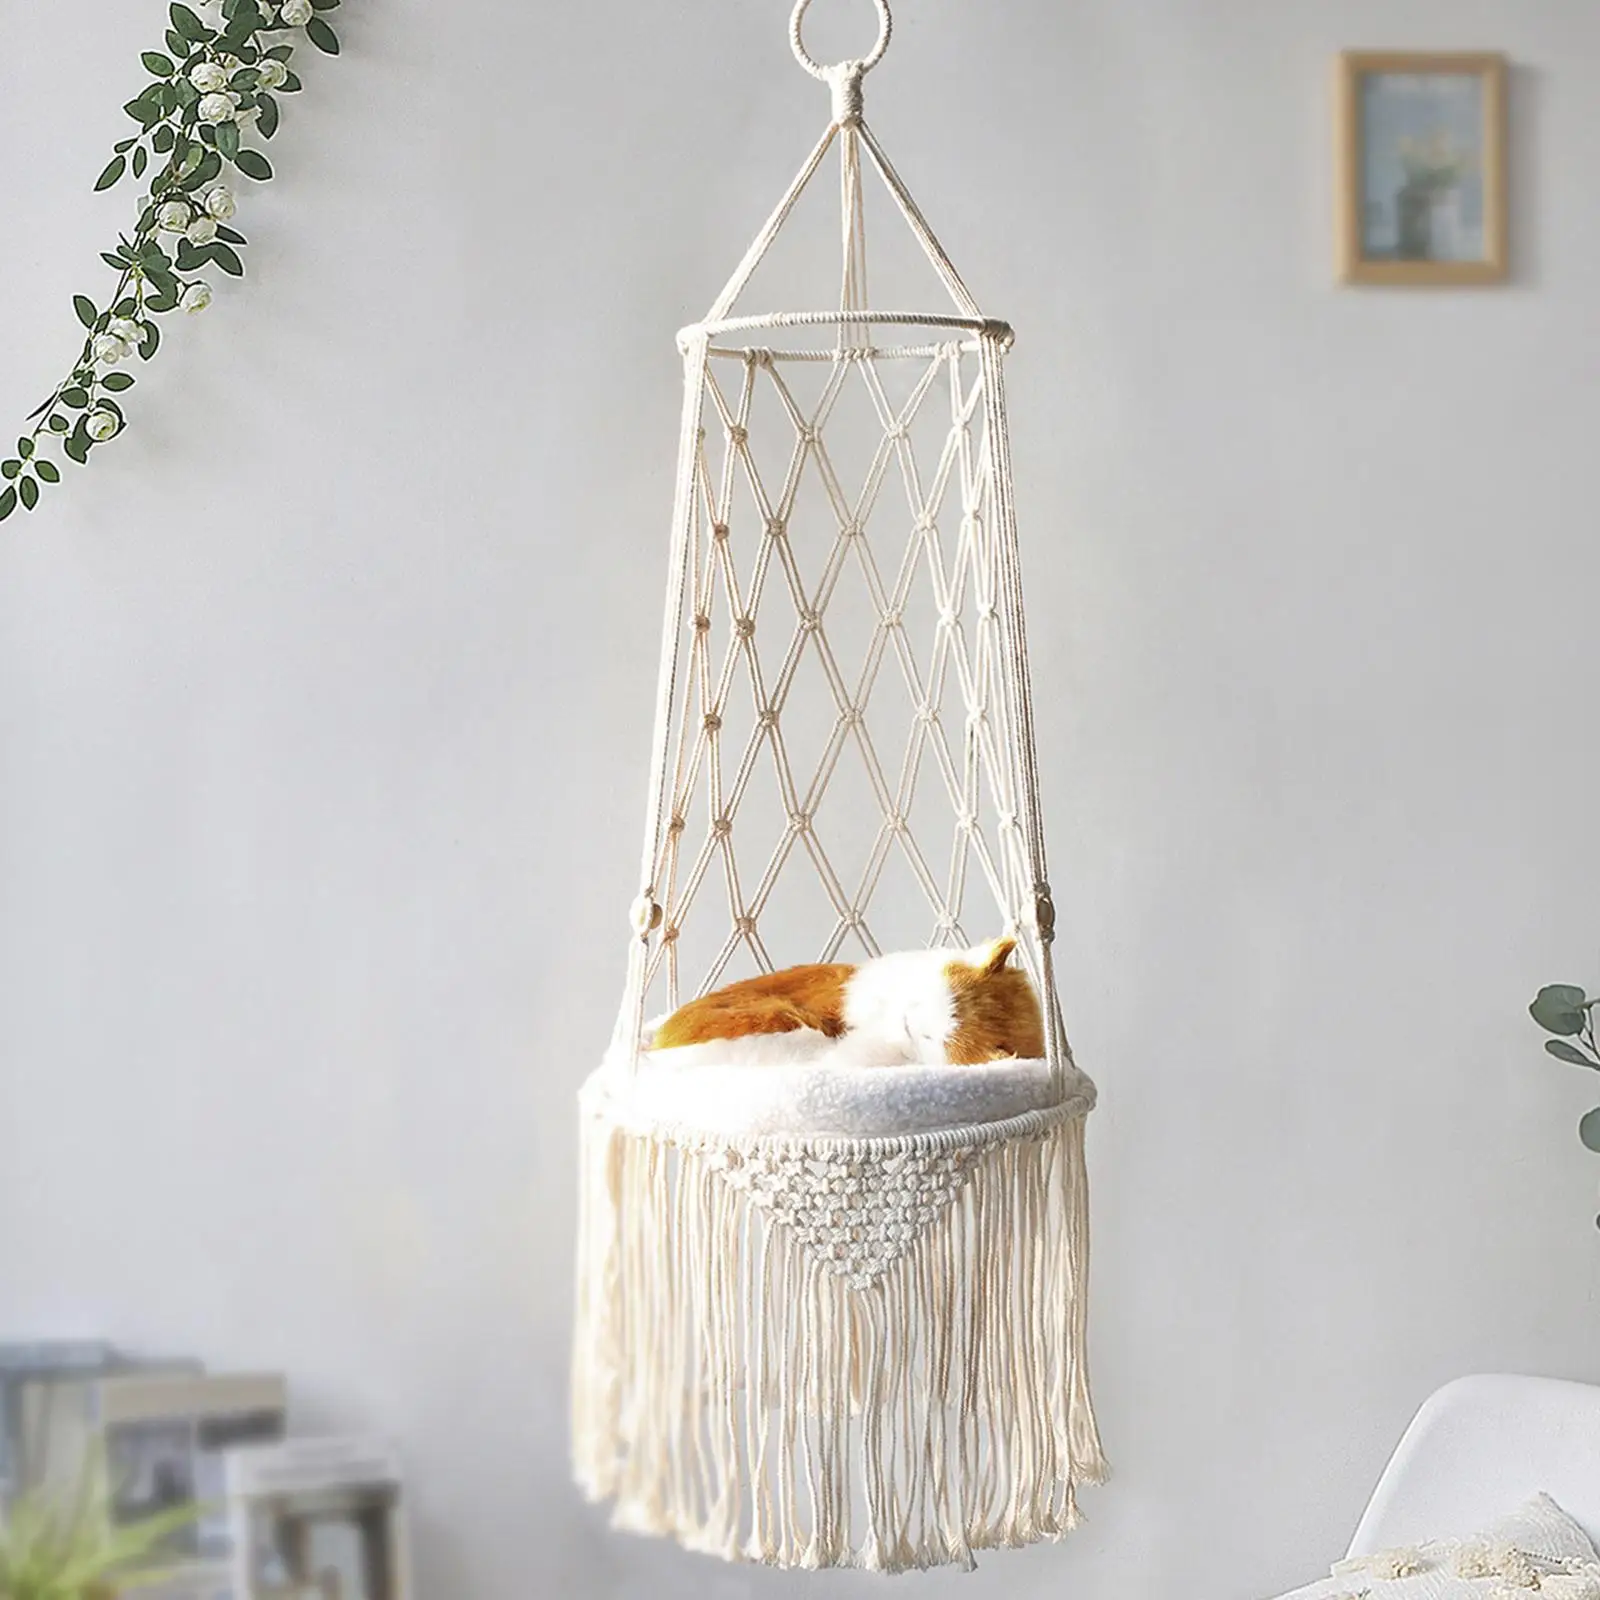 Cat Hammock Decoration Beige Tassel Cotton Rope House Basket Nest for Indoor Outdoor Garden